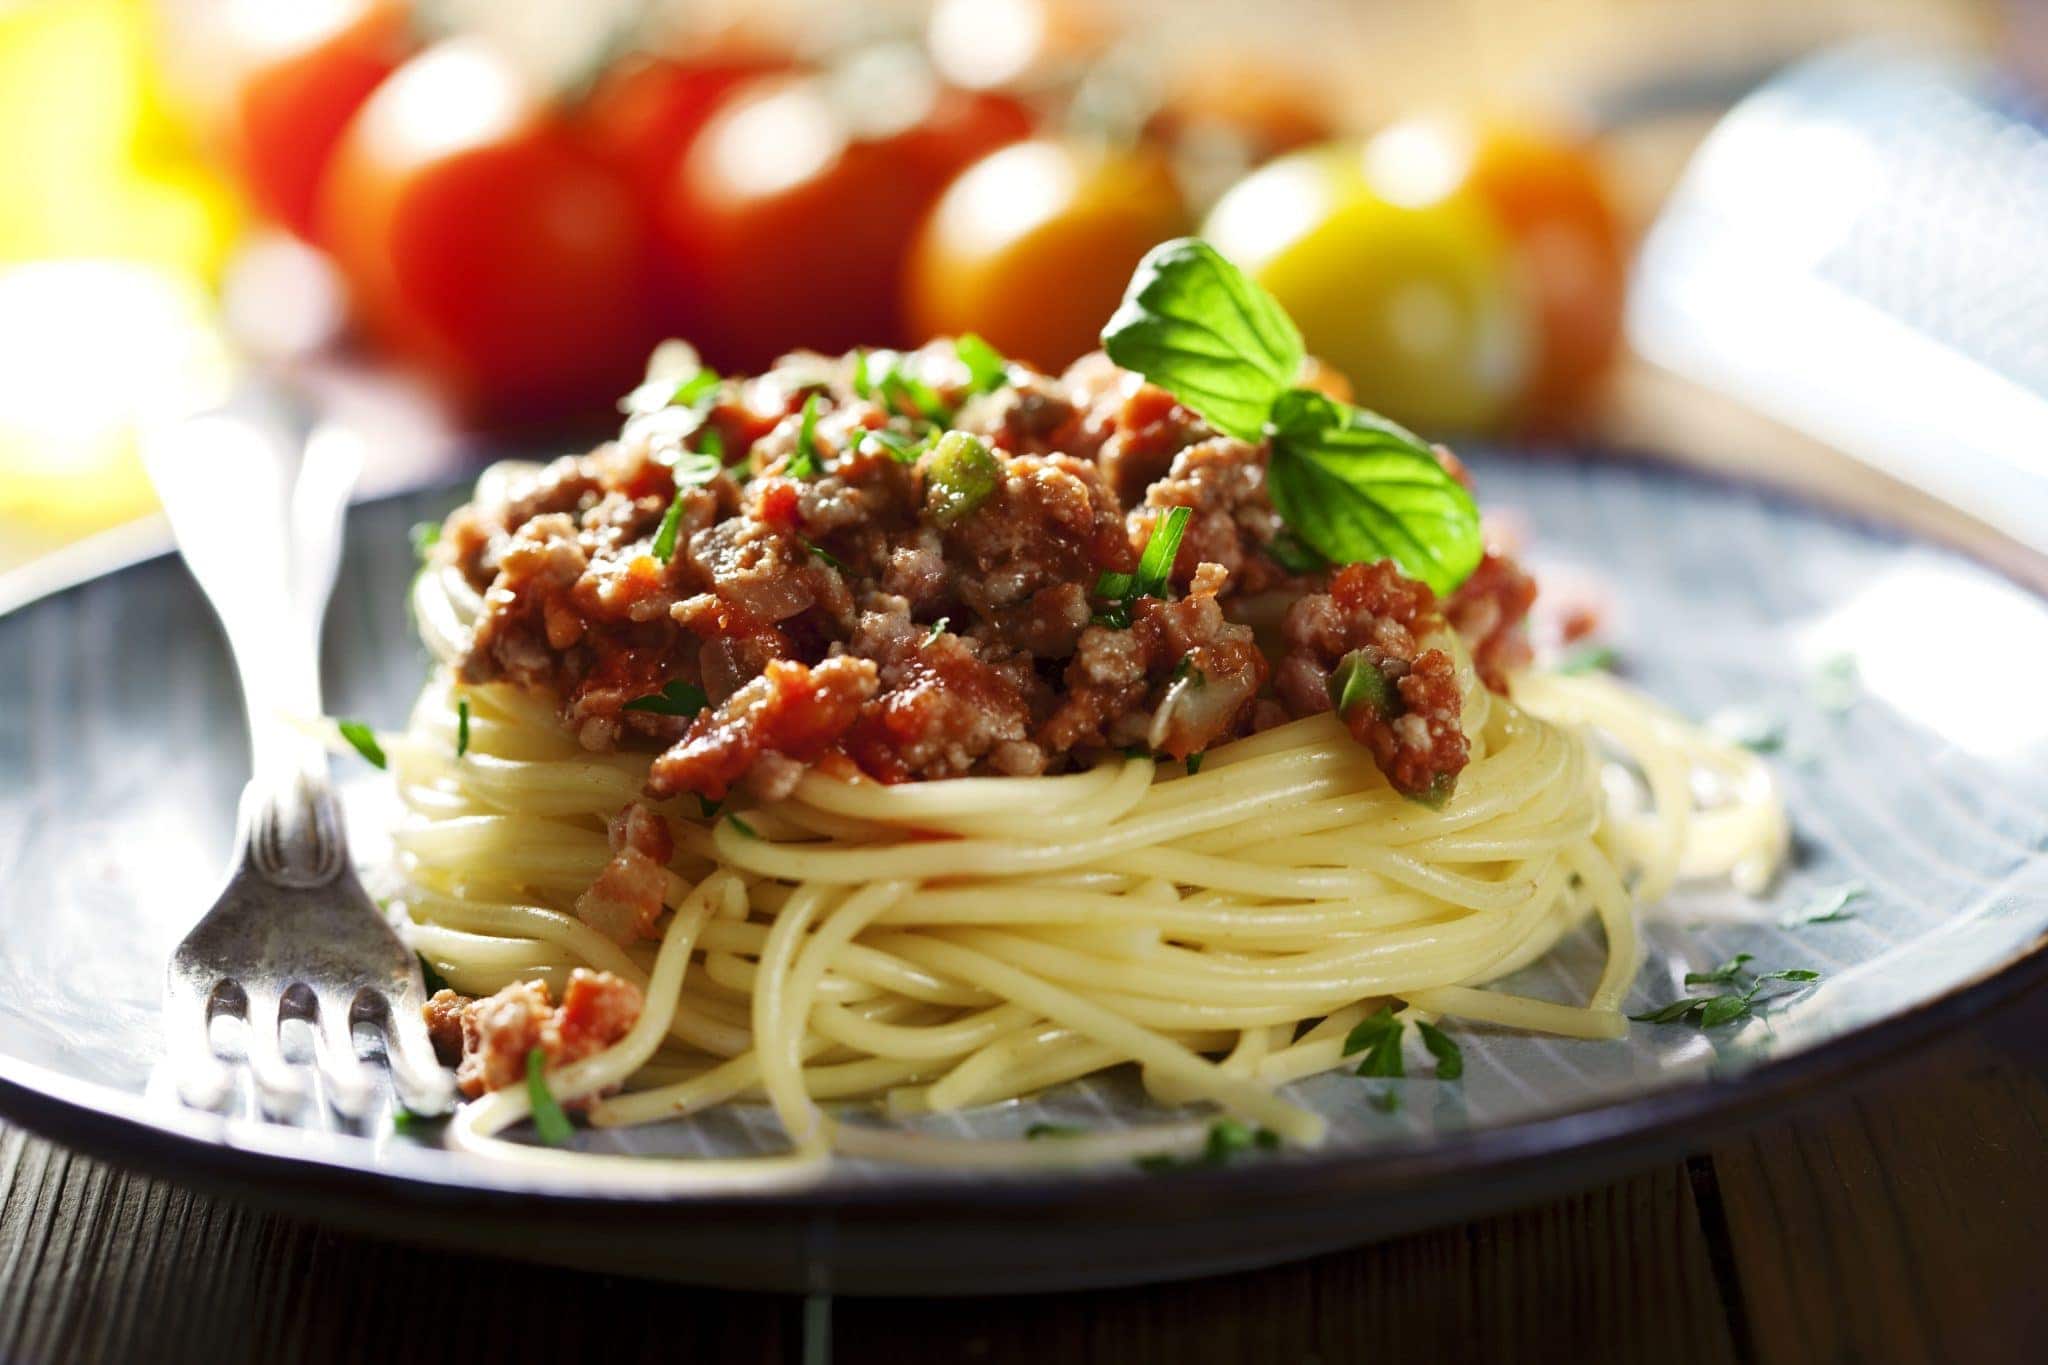 Homemade Italian spaghetti sauce is delicious.